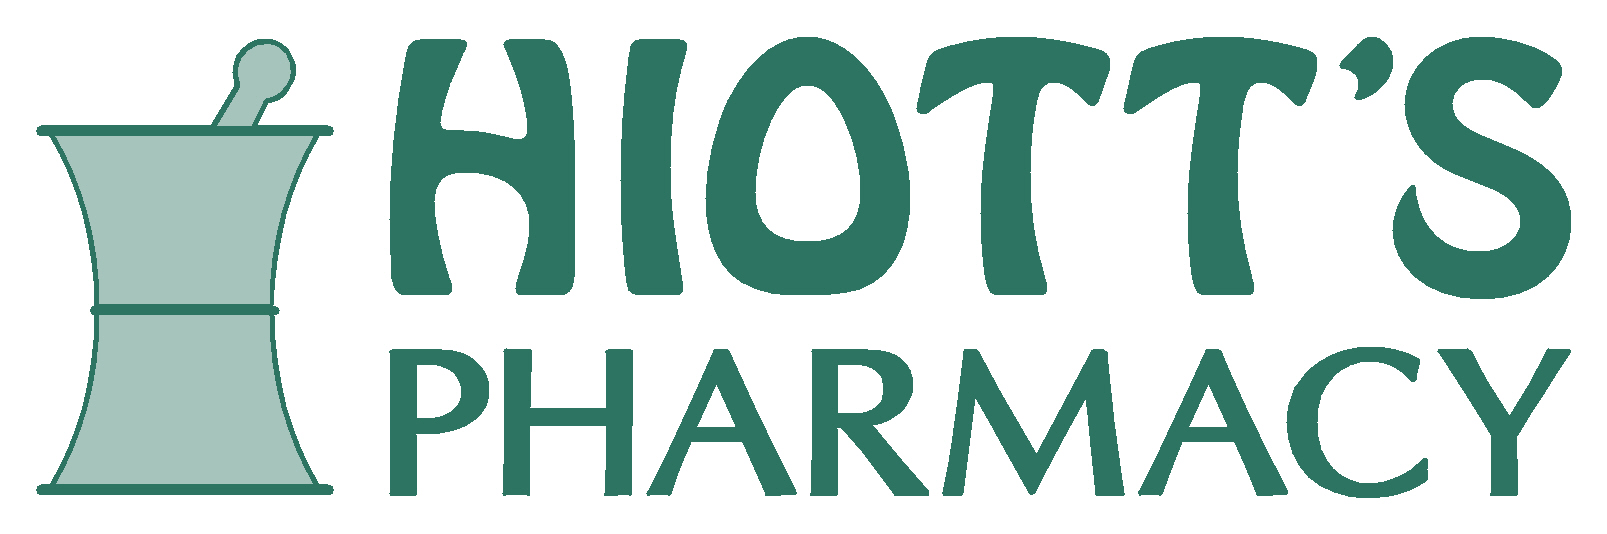 Hiott’s Pharmacy